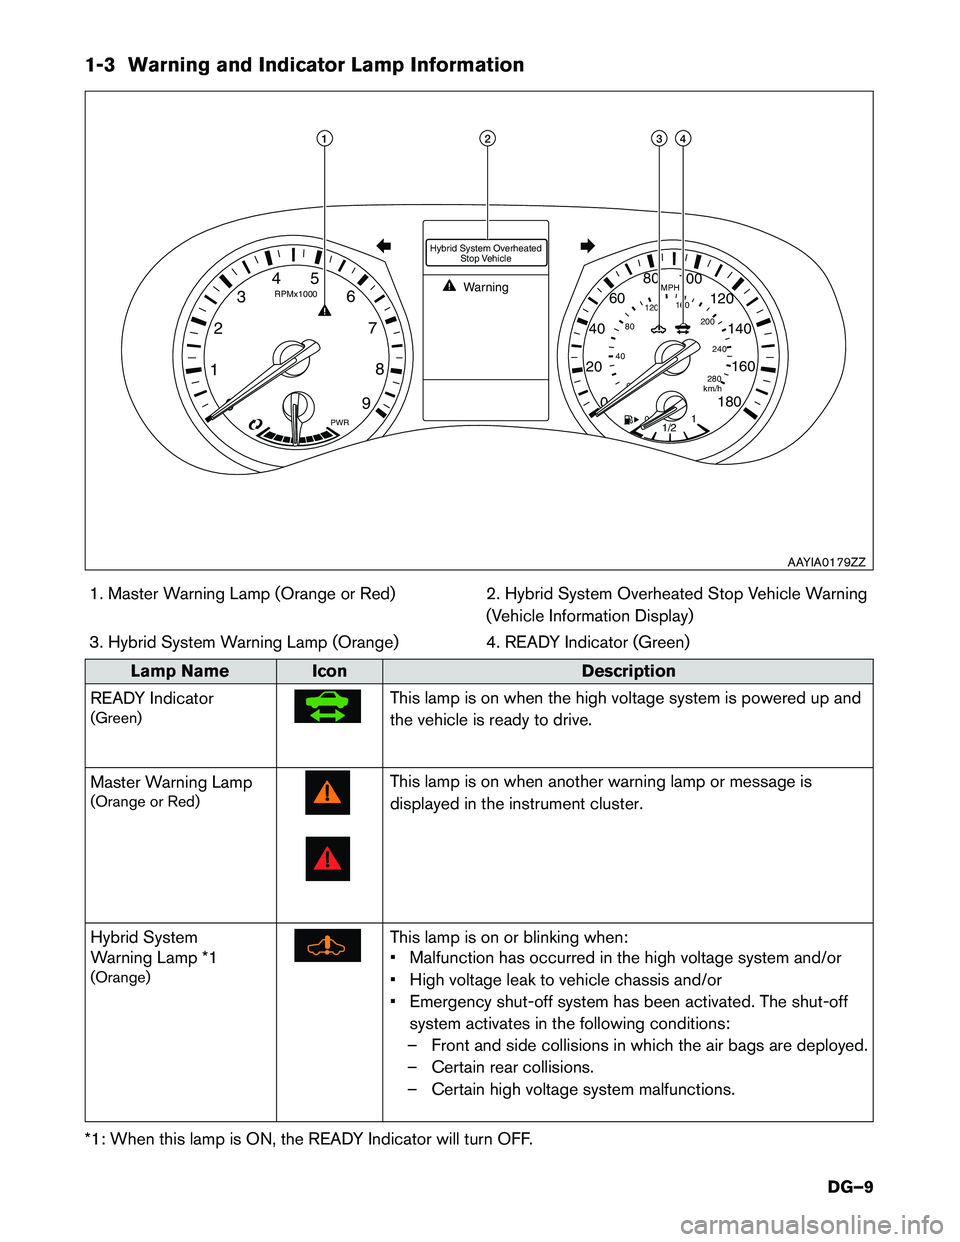 INFINITI Q50 HYBRID 2014  Dismantling Guide 1-3 Warning and Indicator Lamp Information1. Master Warning Lamp (Orange or Red) 2. Hybrid System Overheated Stop Vehicle Warning (Vehicle Information Display)
3. Hybrid System Warning Lamp (Orange) 4